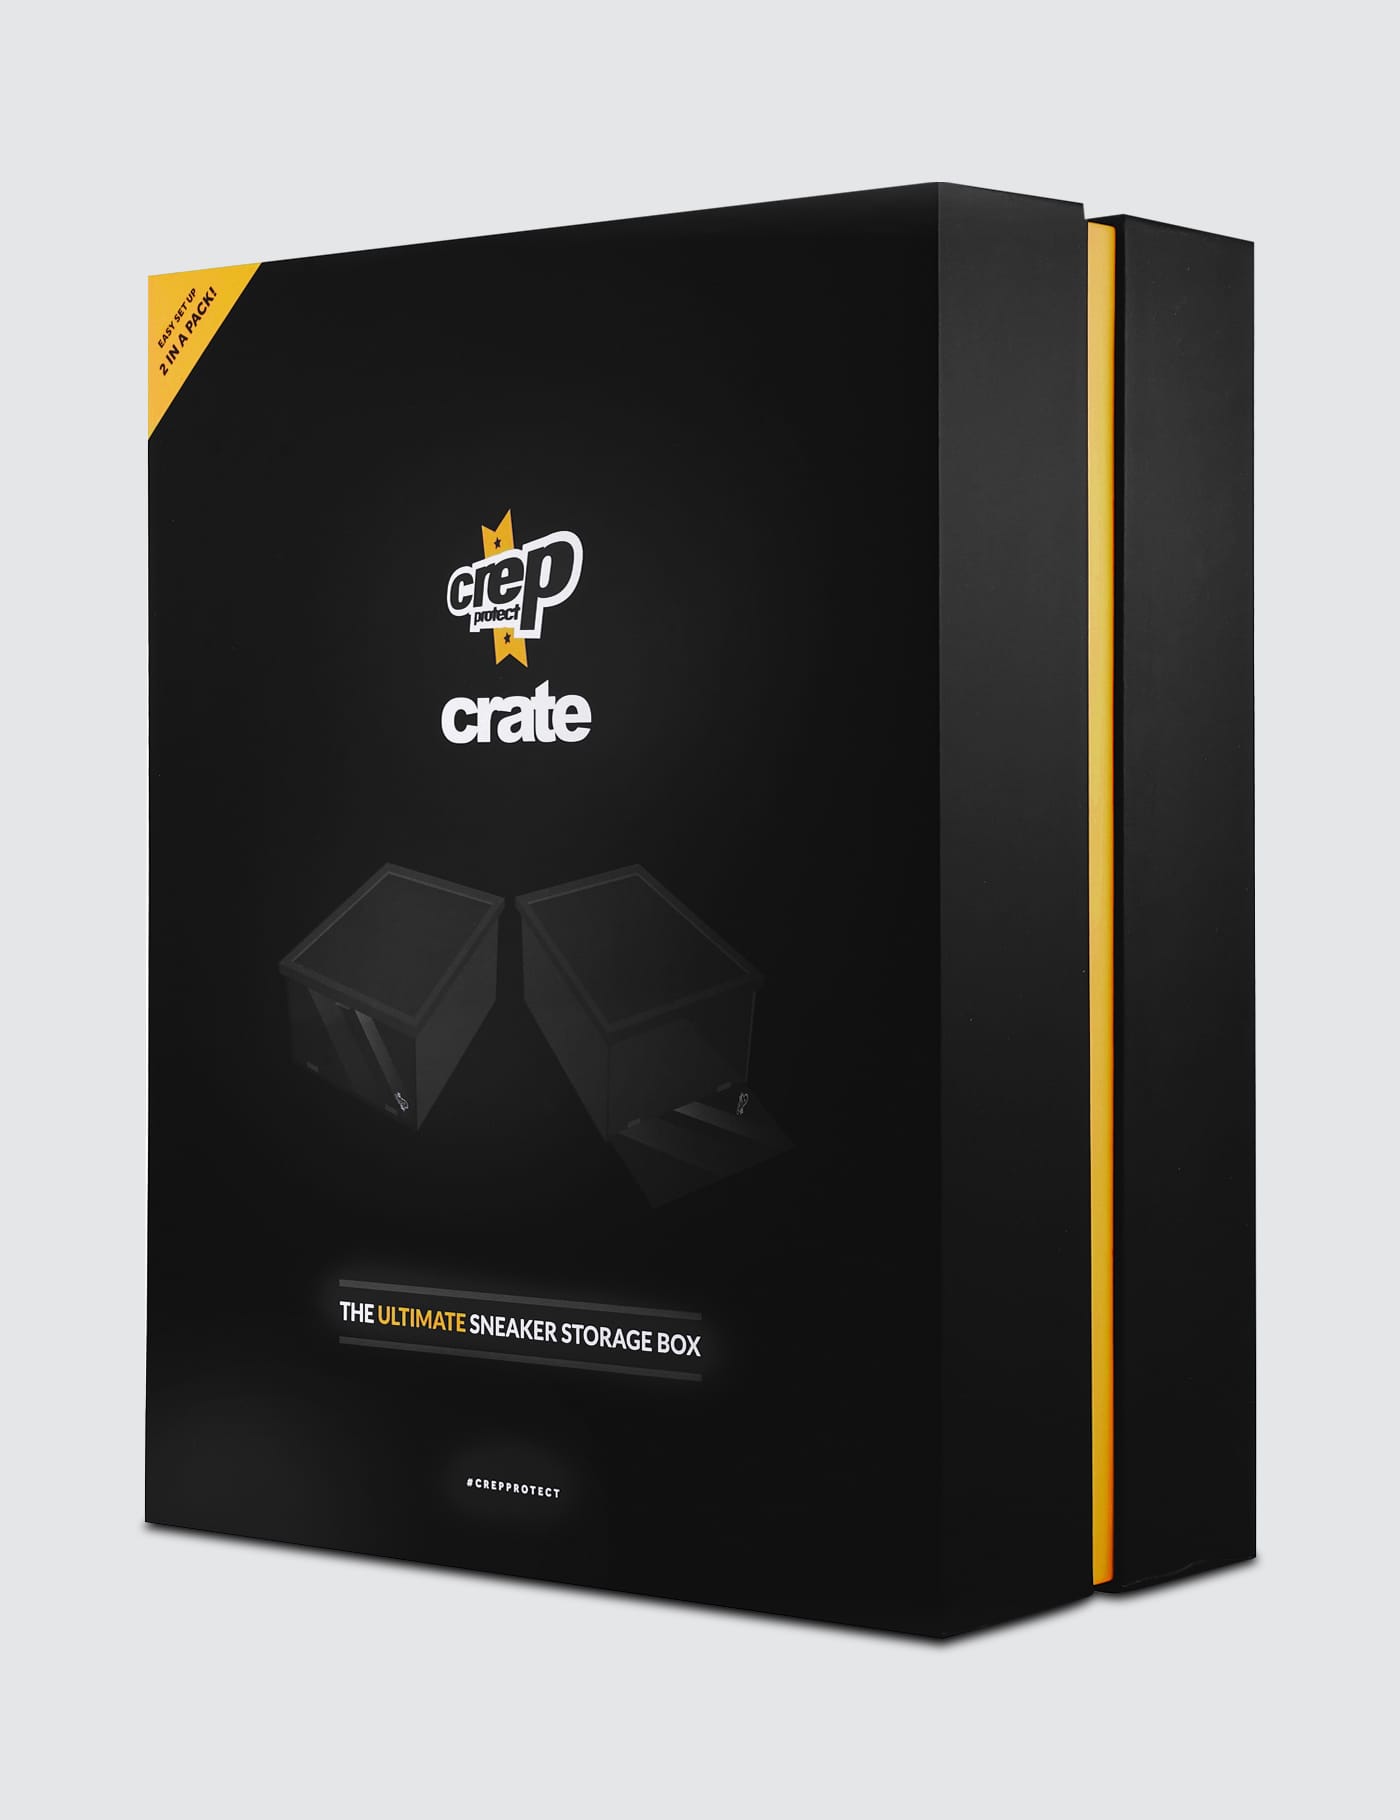 crep protect crates sneaker storage box